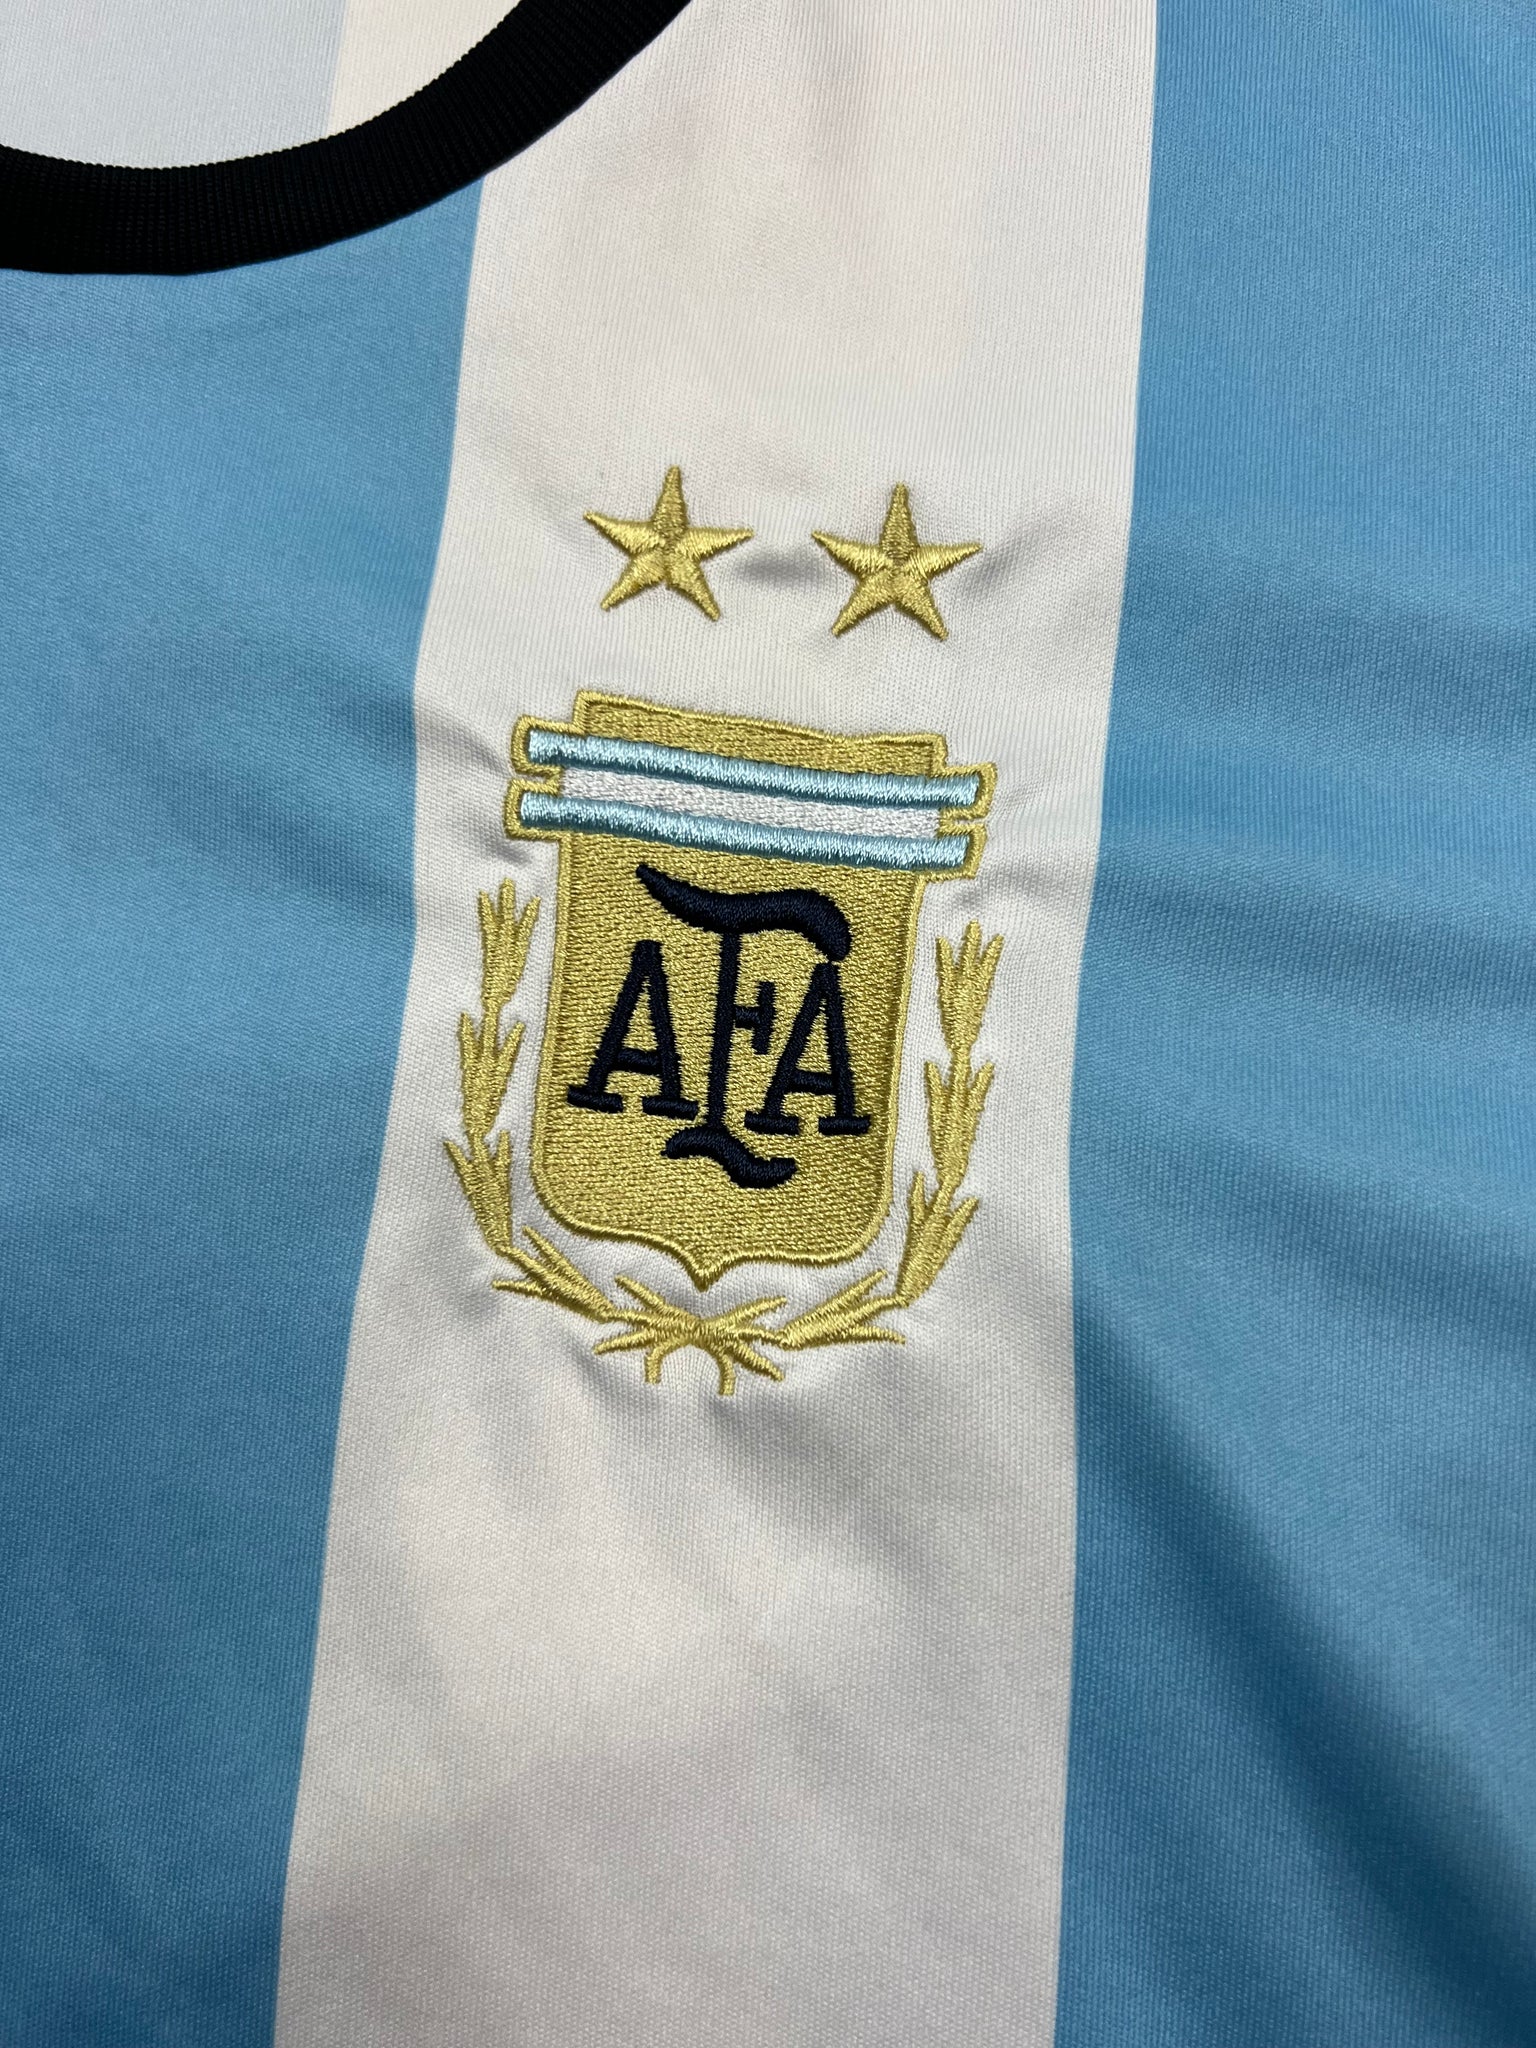 Adidas Argentina Jersey (L)